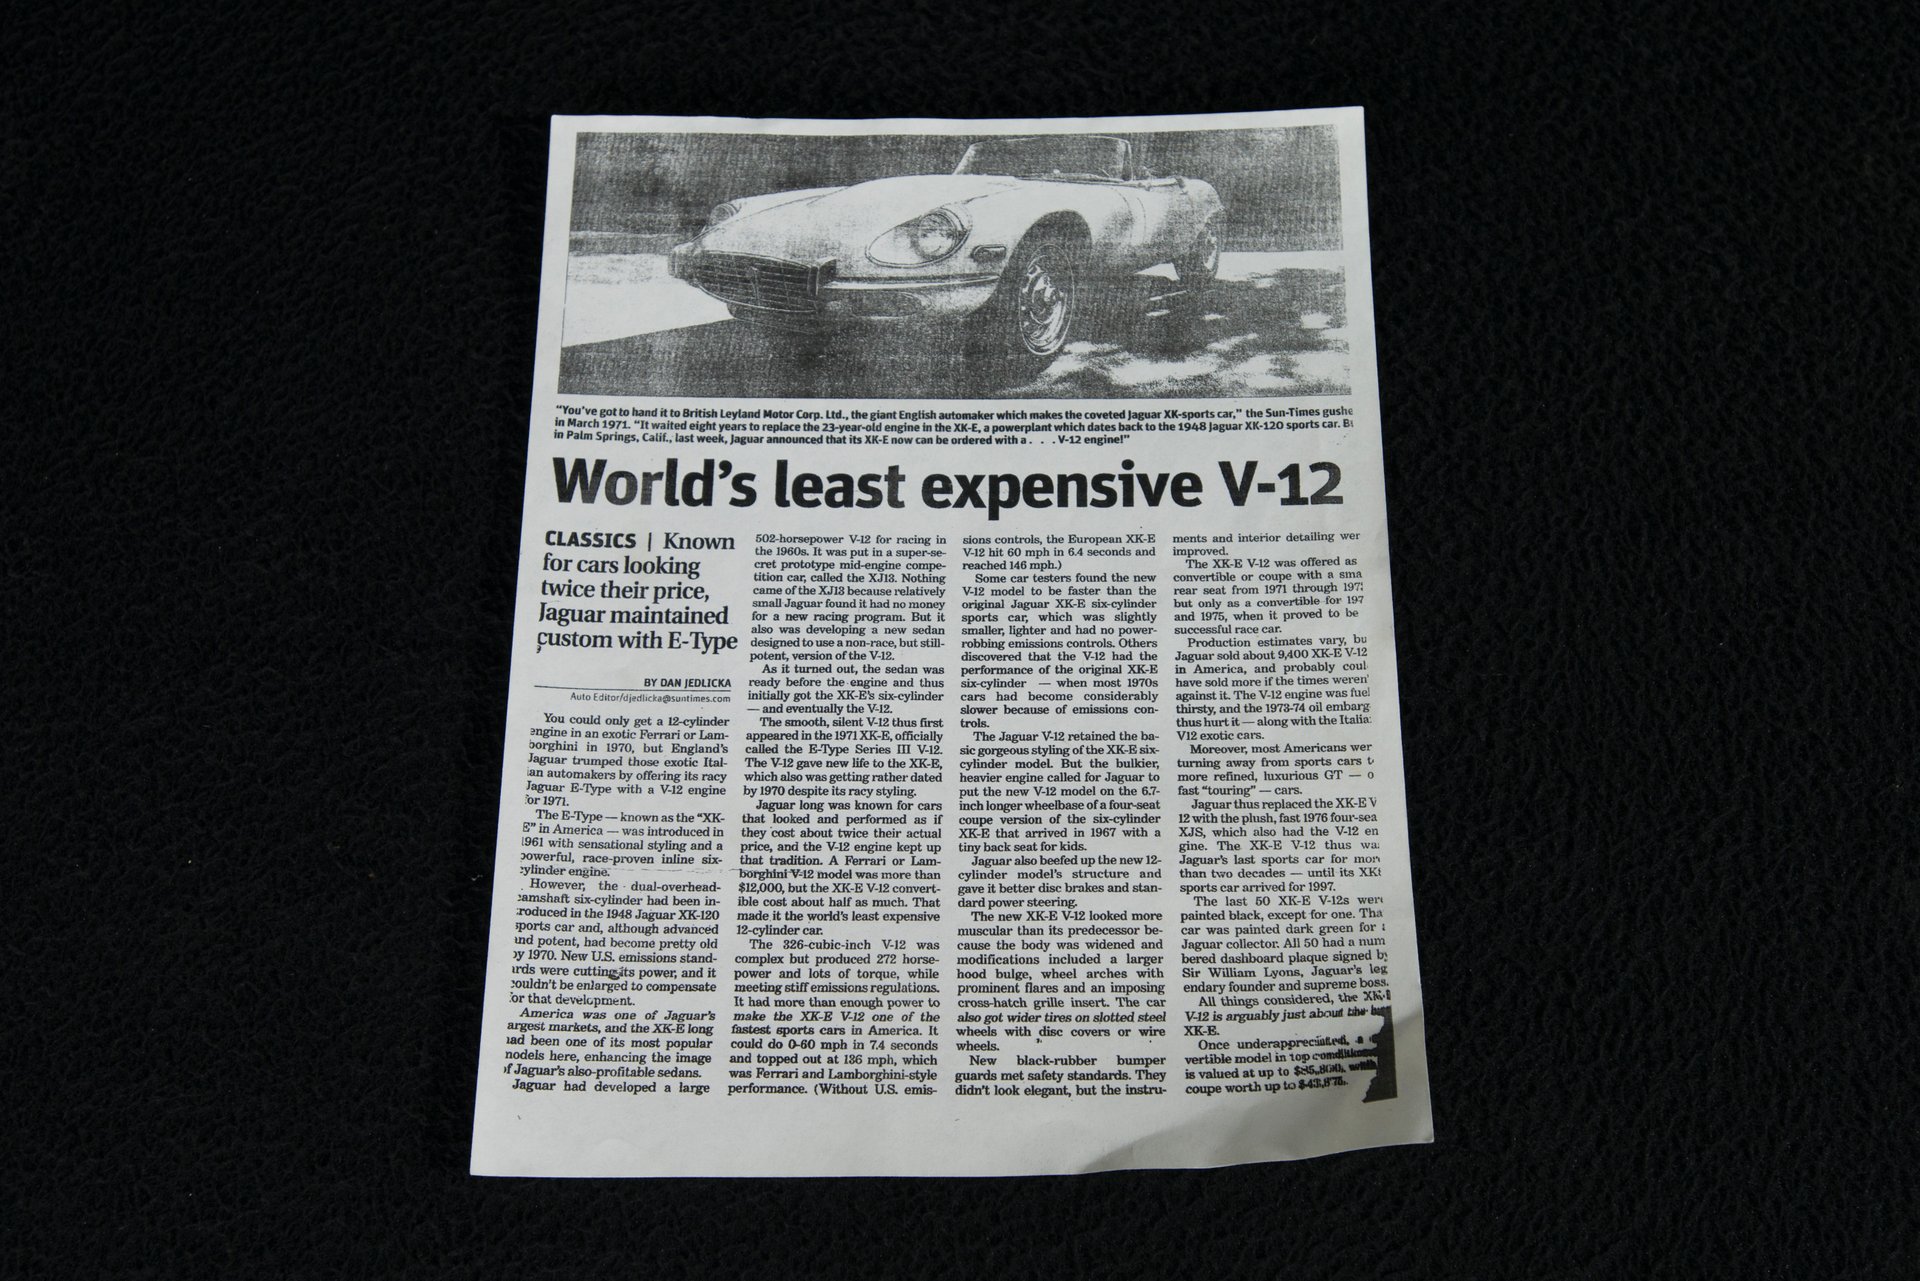 For Sale 1974 Jaguar XKE